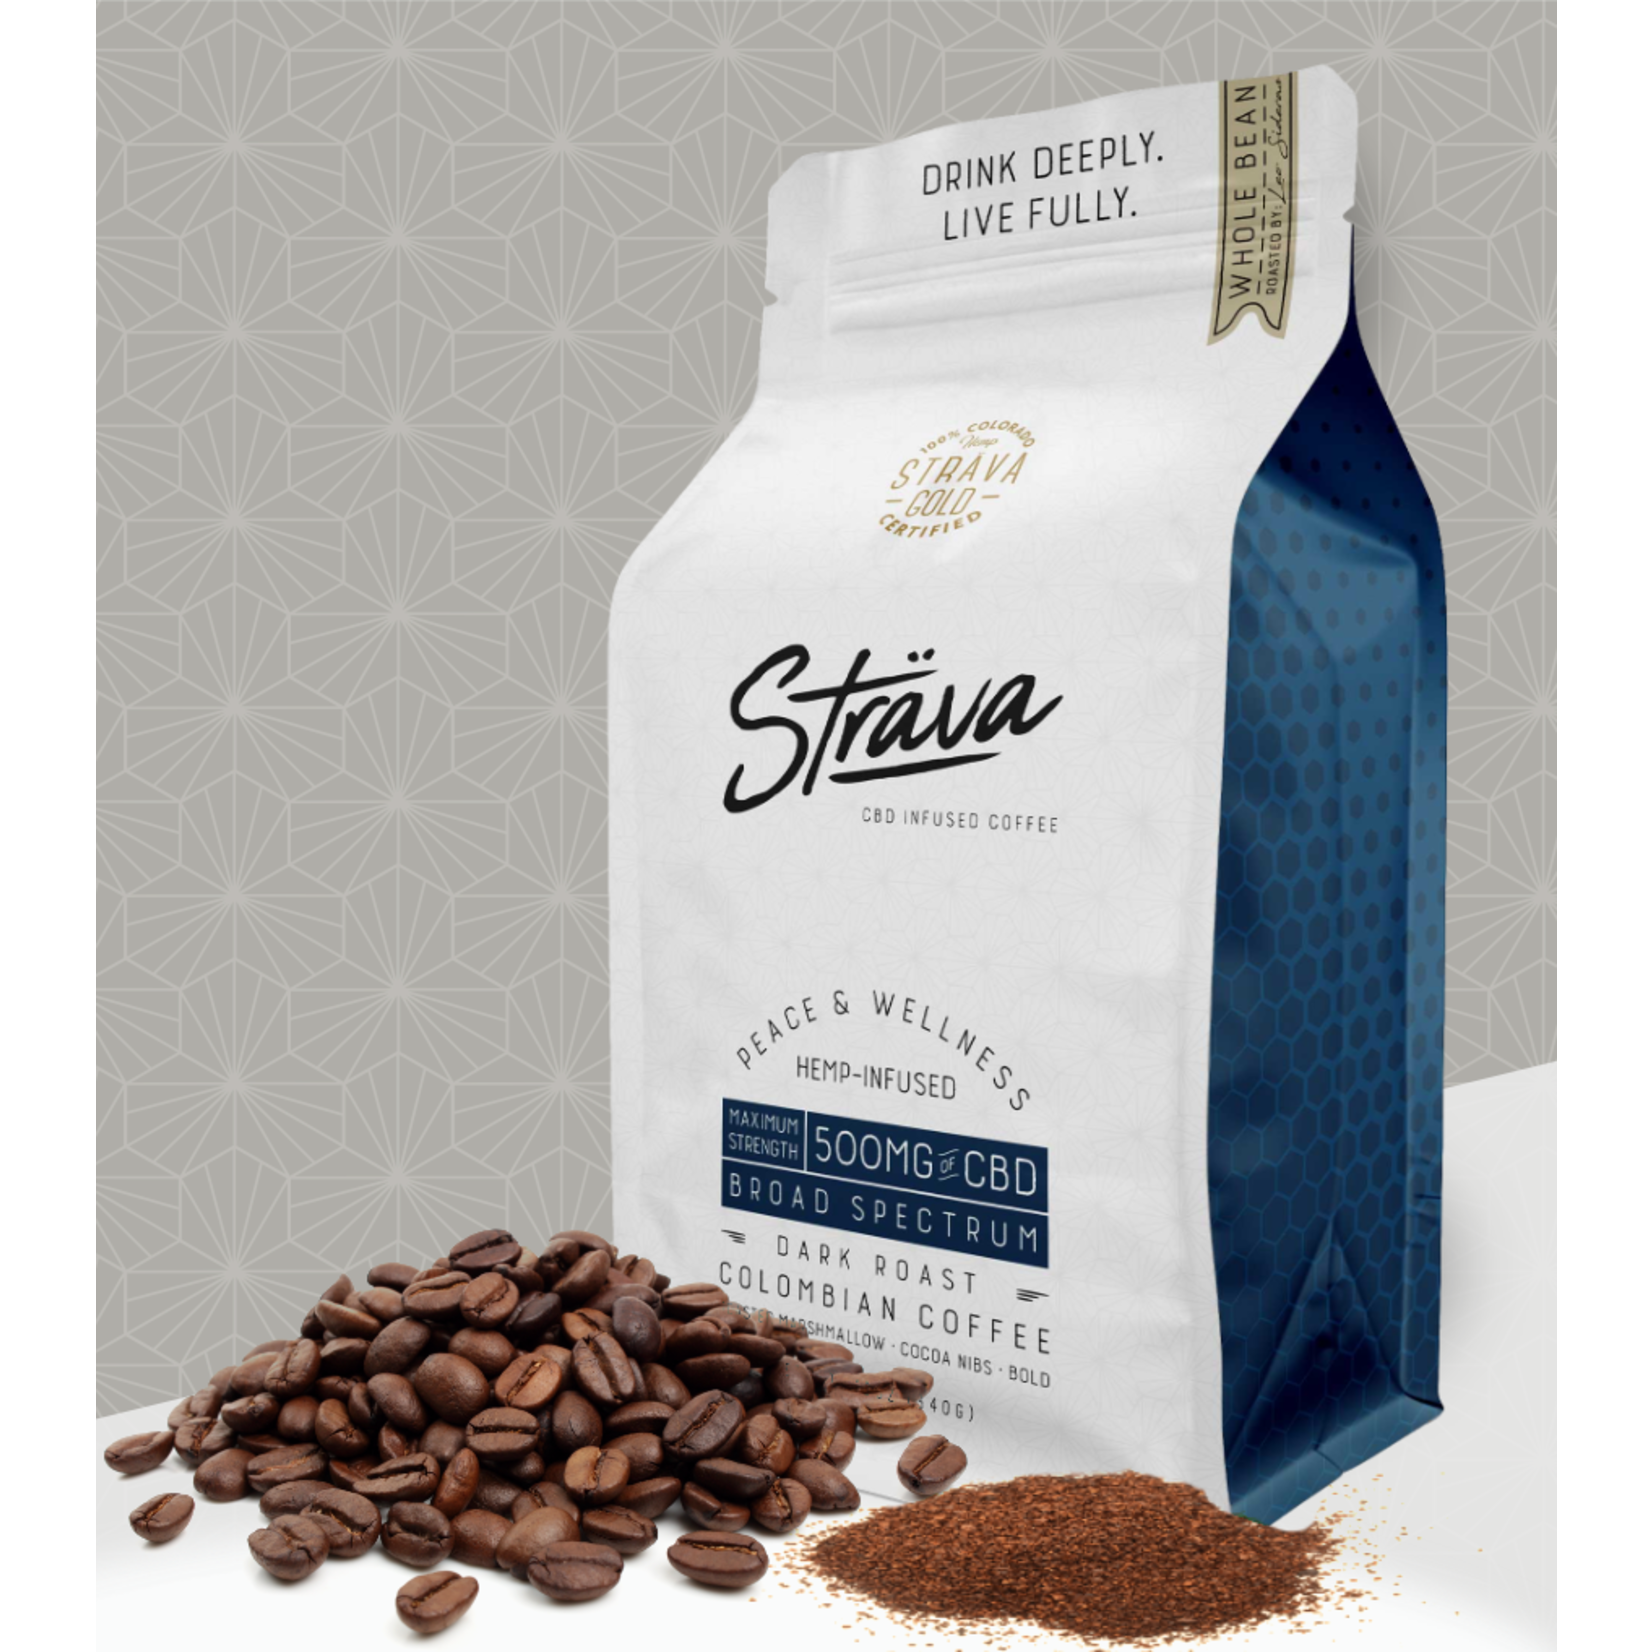 Strava Strava CBD Infused Coffee 500mg Maximum Strength Broad Spectrum Dark Roast Columbian Coffee